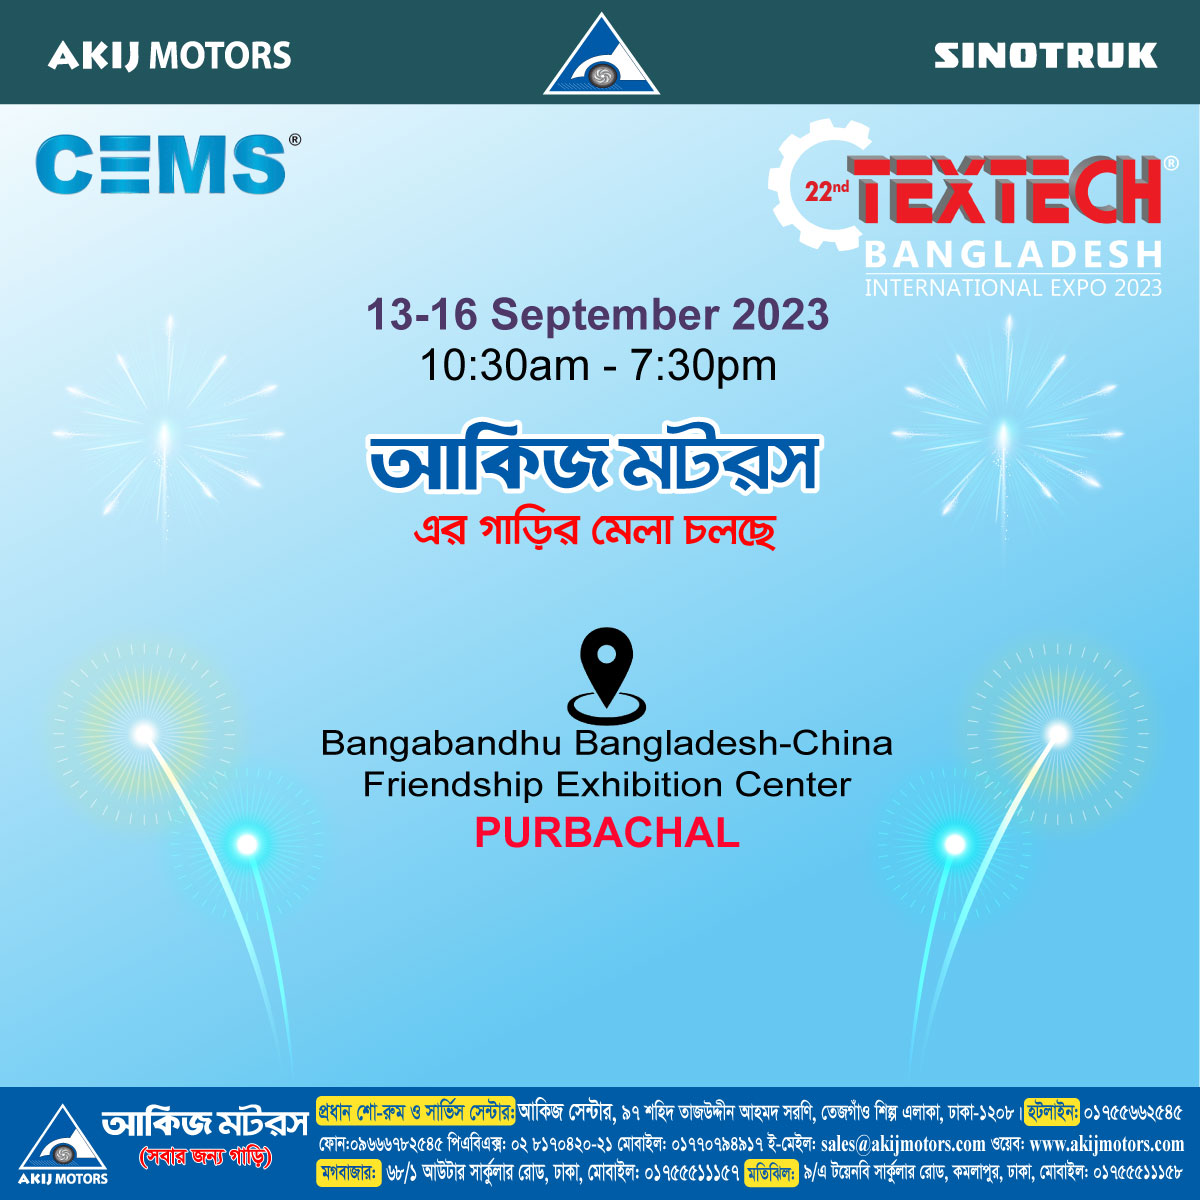 Textech Bangladesh International Expo 2023